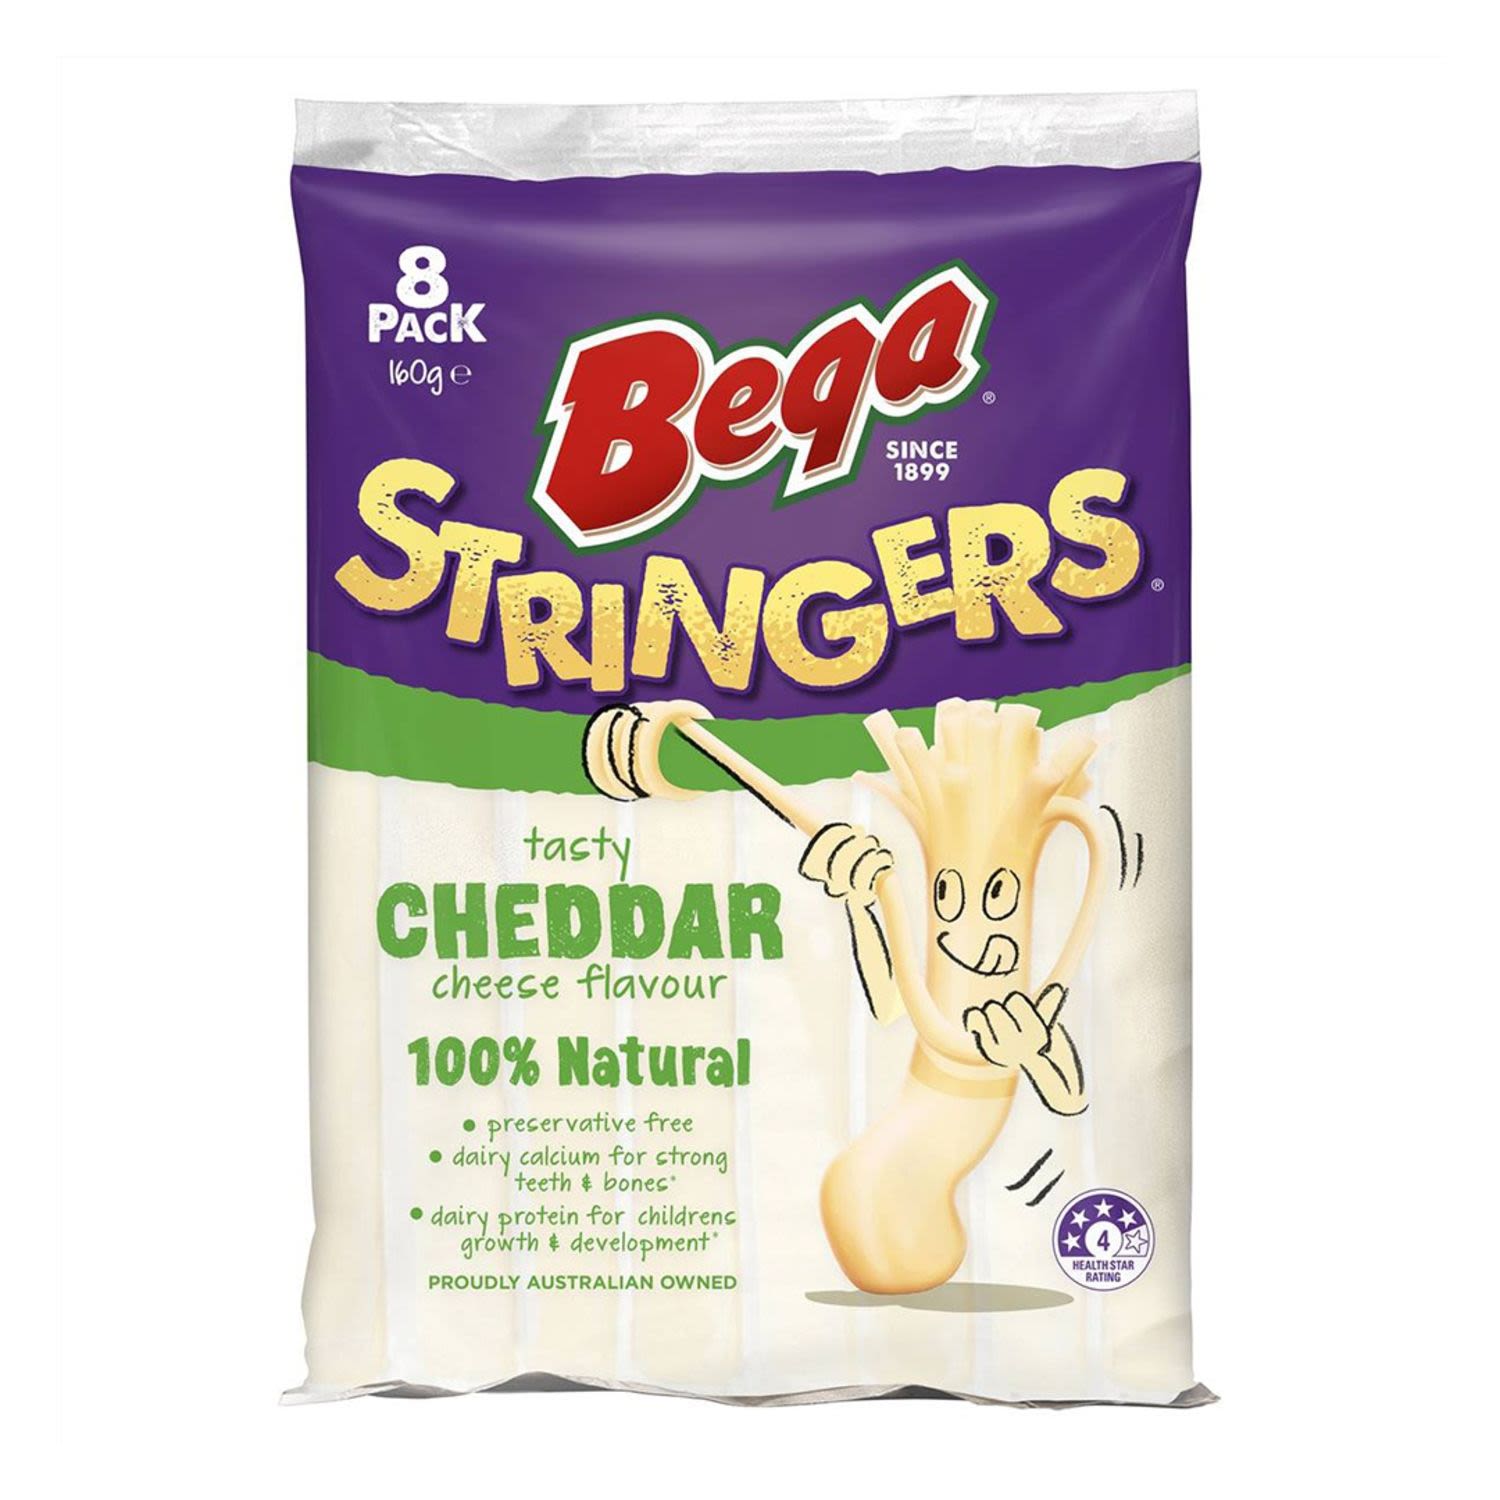 Bega Stringers Cheddar Cheese, 8 Each